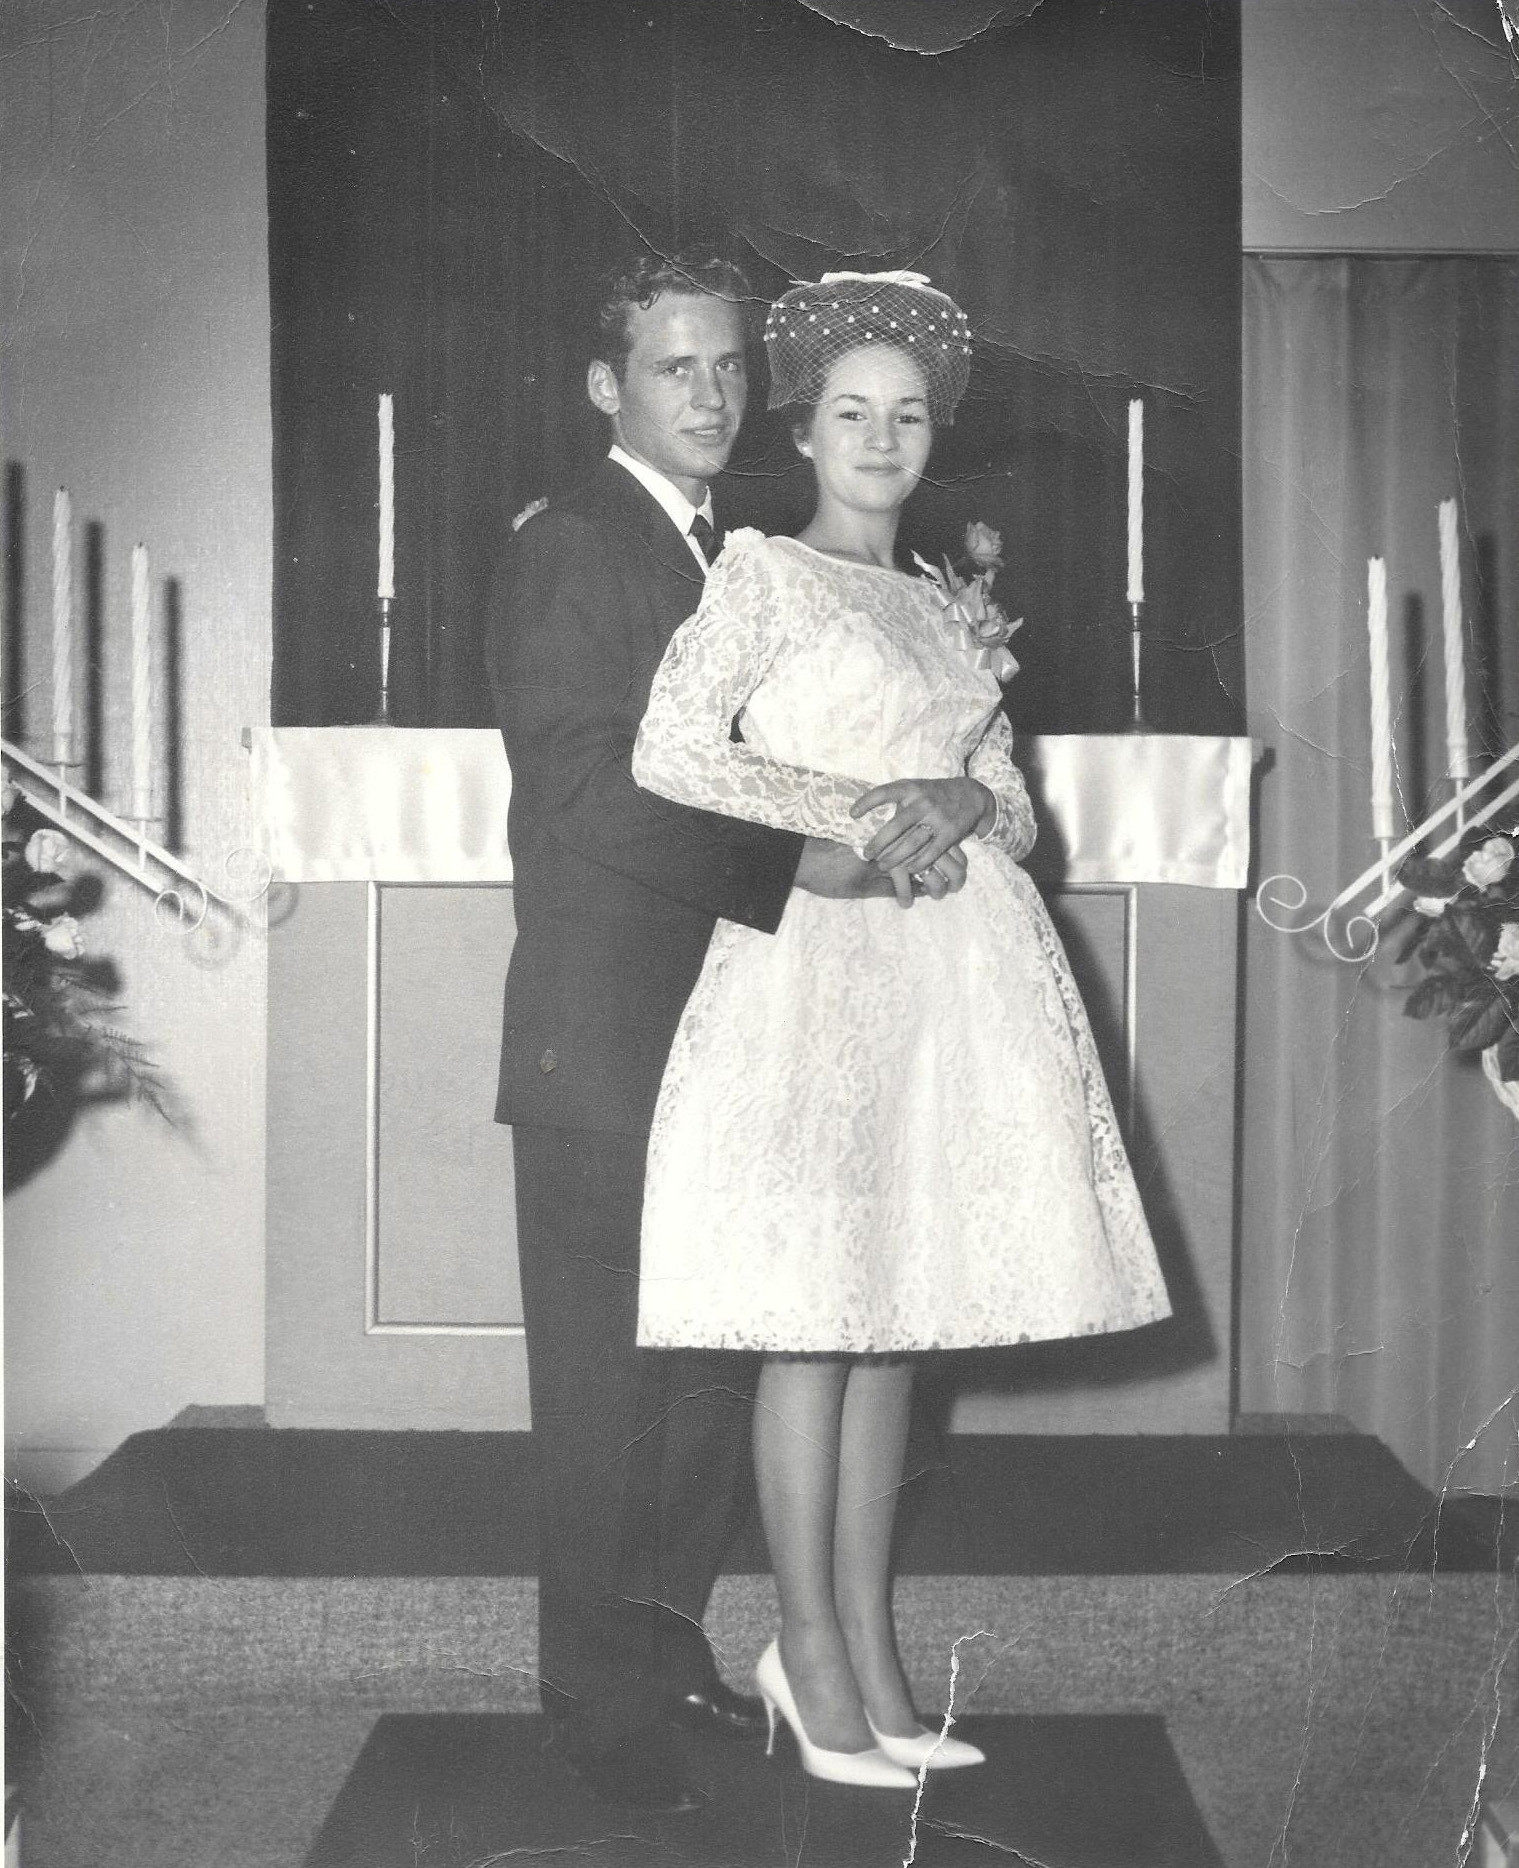 Marriage of Timothy Martin Mallory to Michelle Elizabeth Johnson Aug. 8, 1962 Reno, Nevada